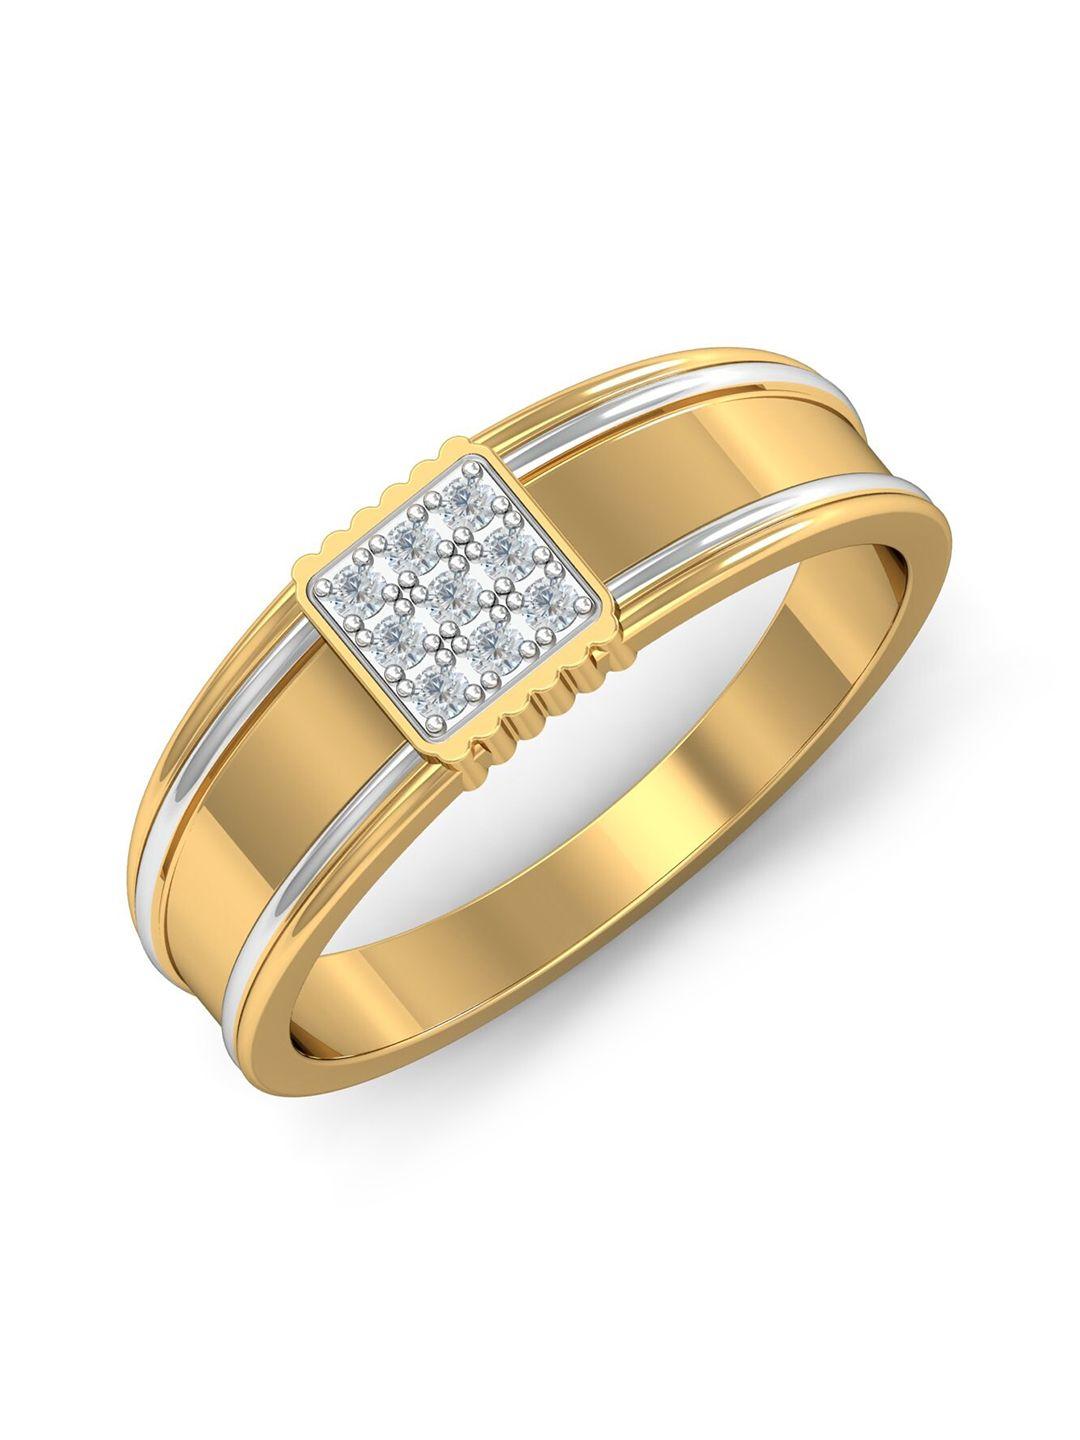 kuberbox rapier men 18kt gold diamond studded ring-4.93gm